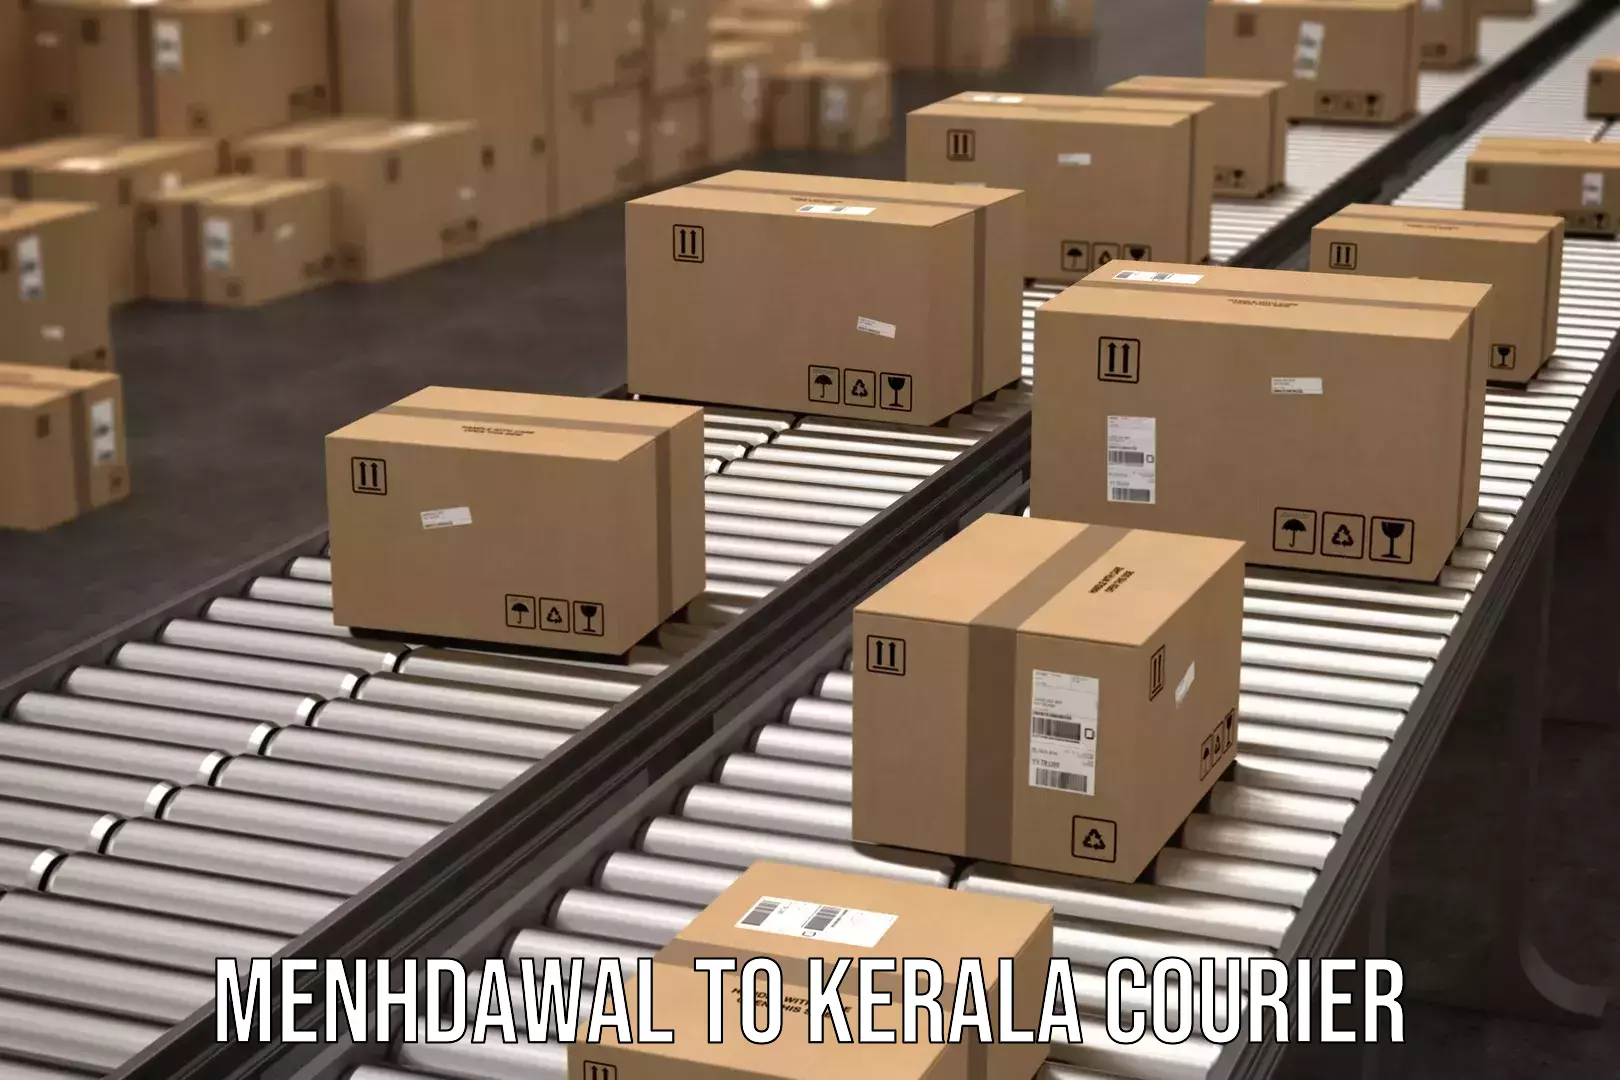 Punctual parcel services Menhdawal to Kerala